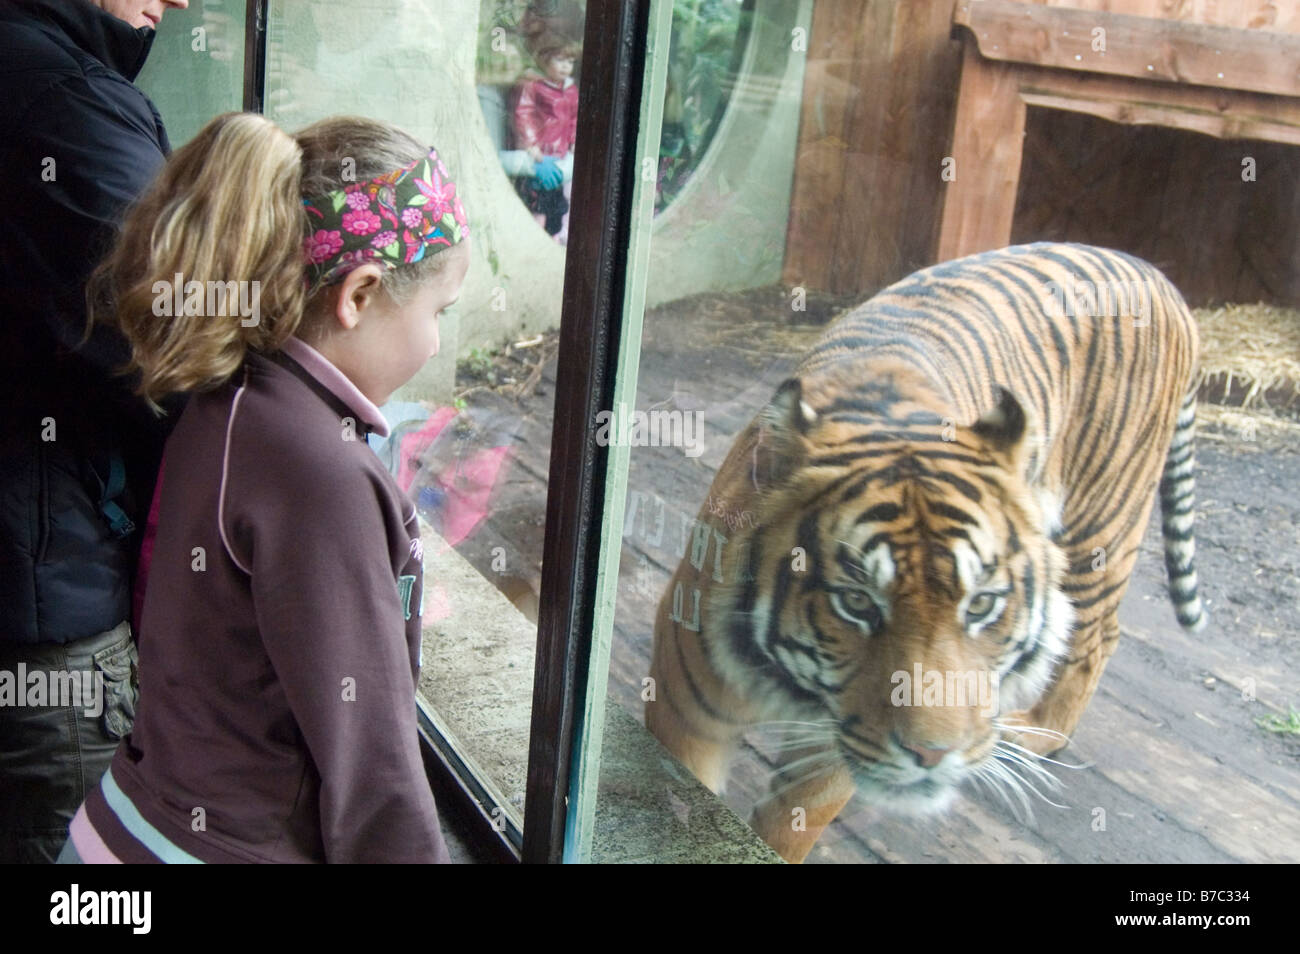 Young girl watching tiger in its enclosure at London Zoo, UK Stock Photo